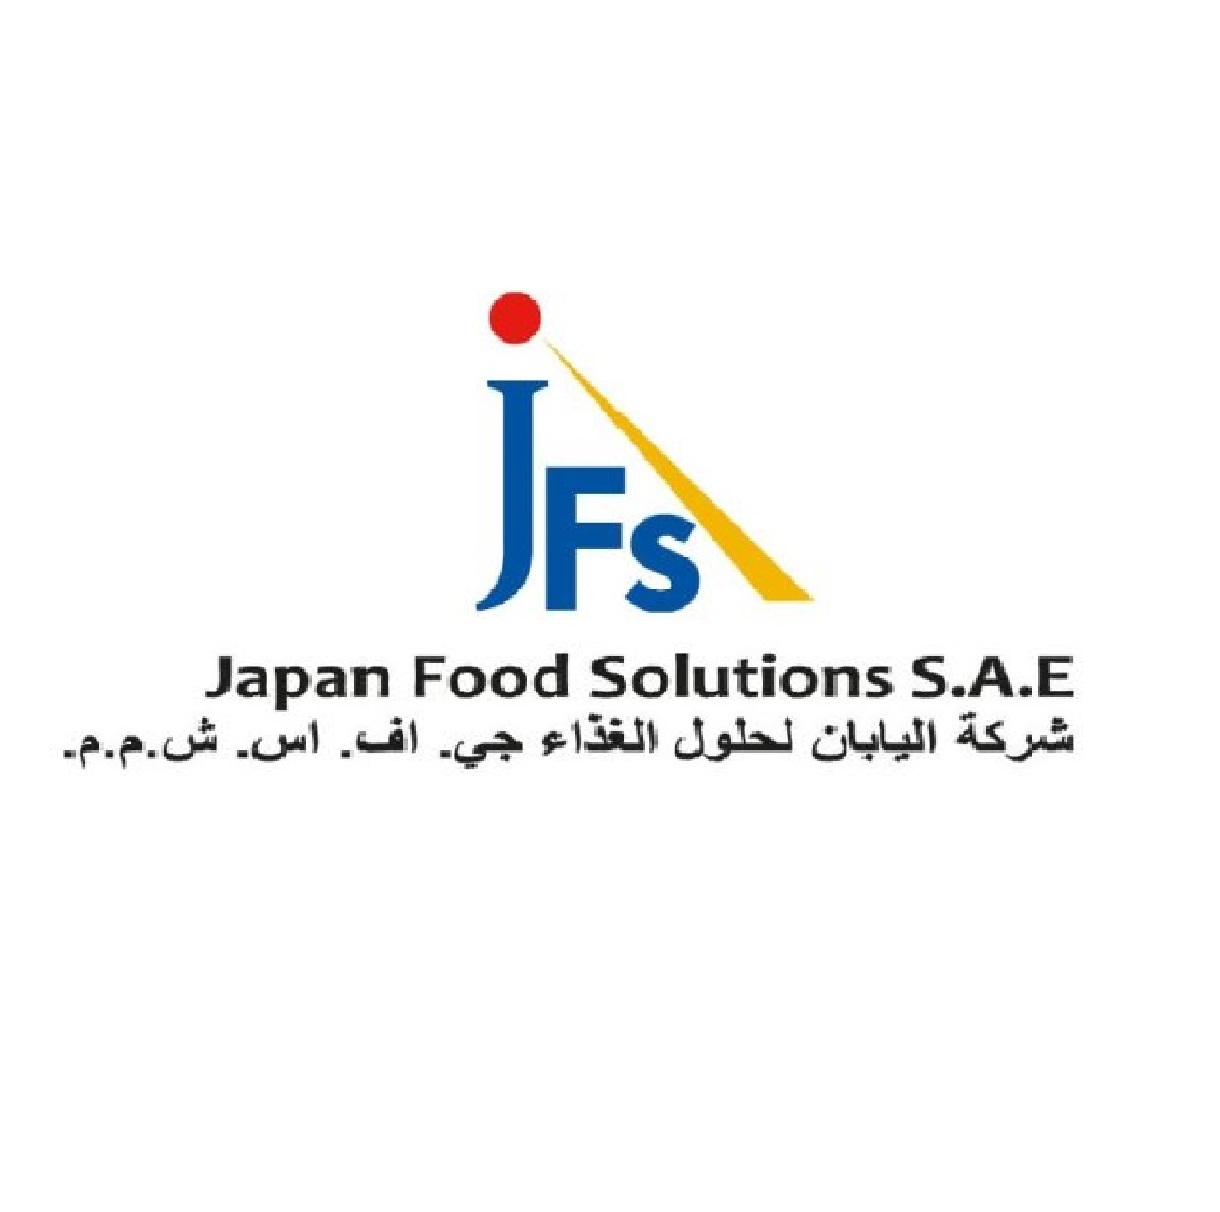 Japan Food Solutions